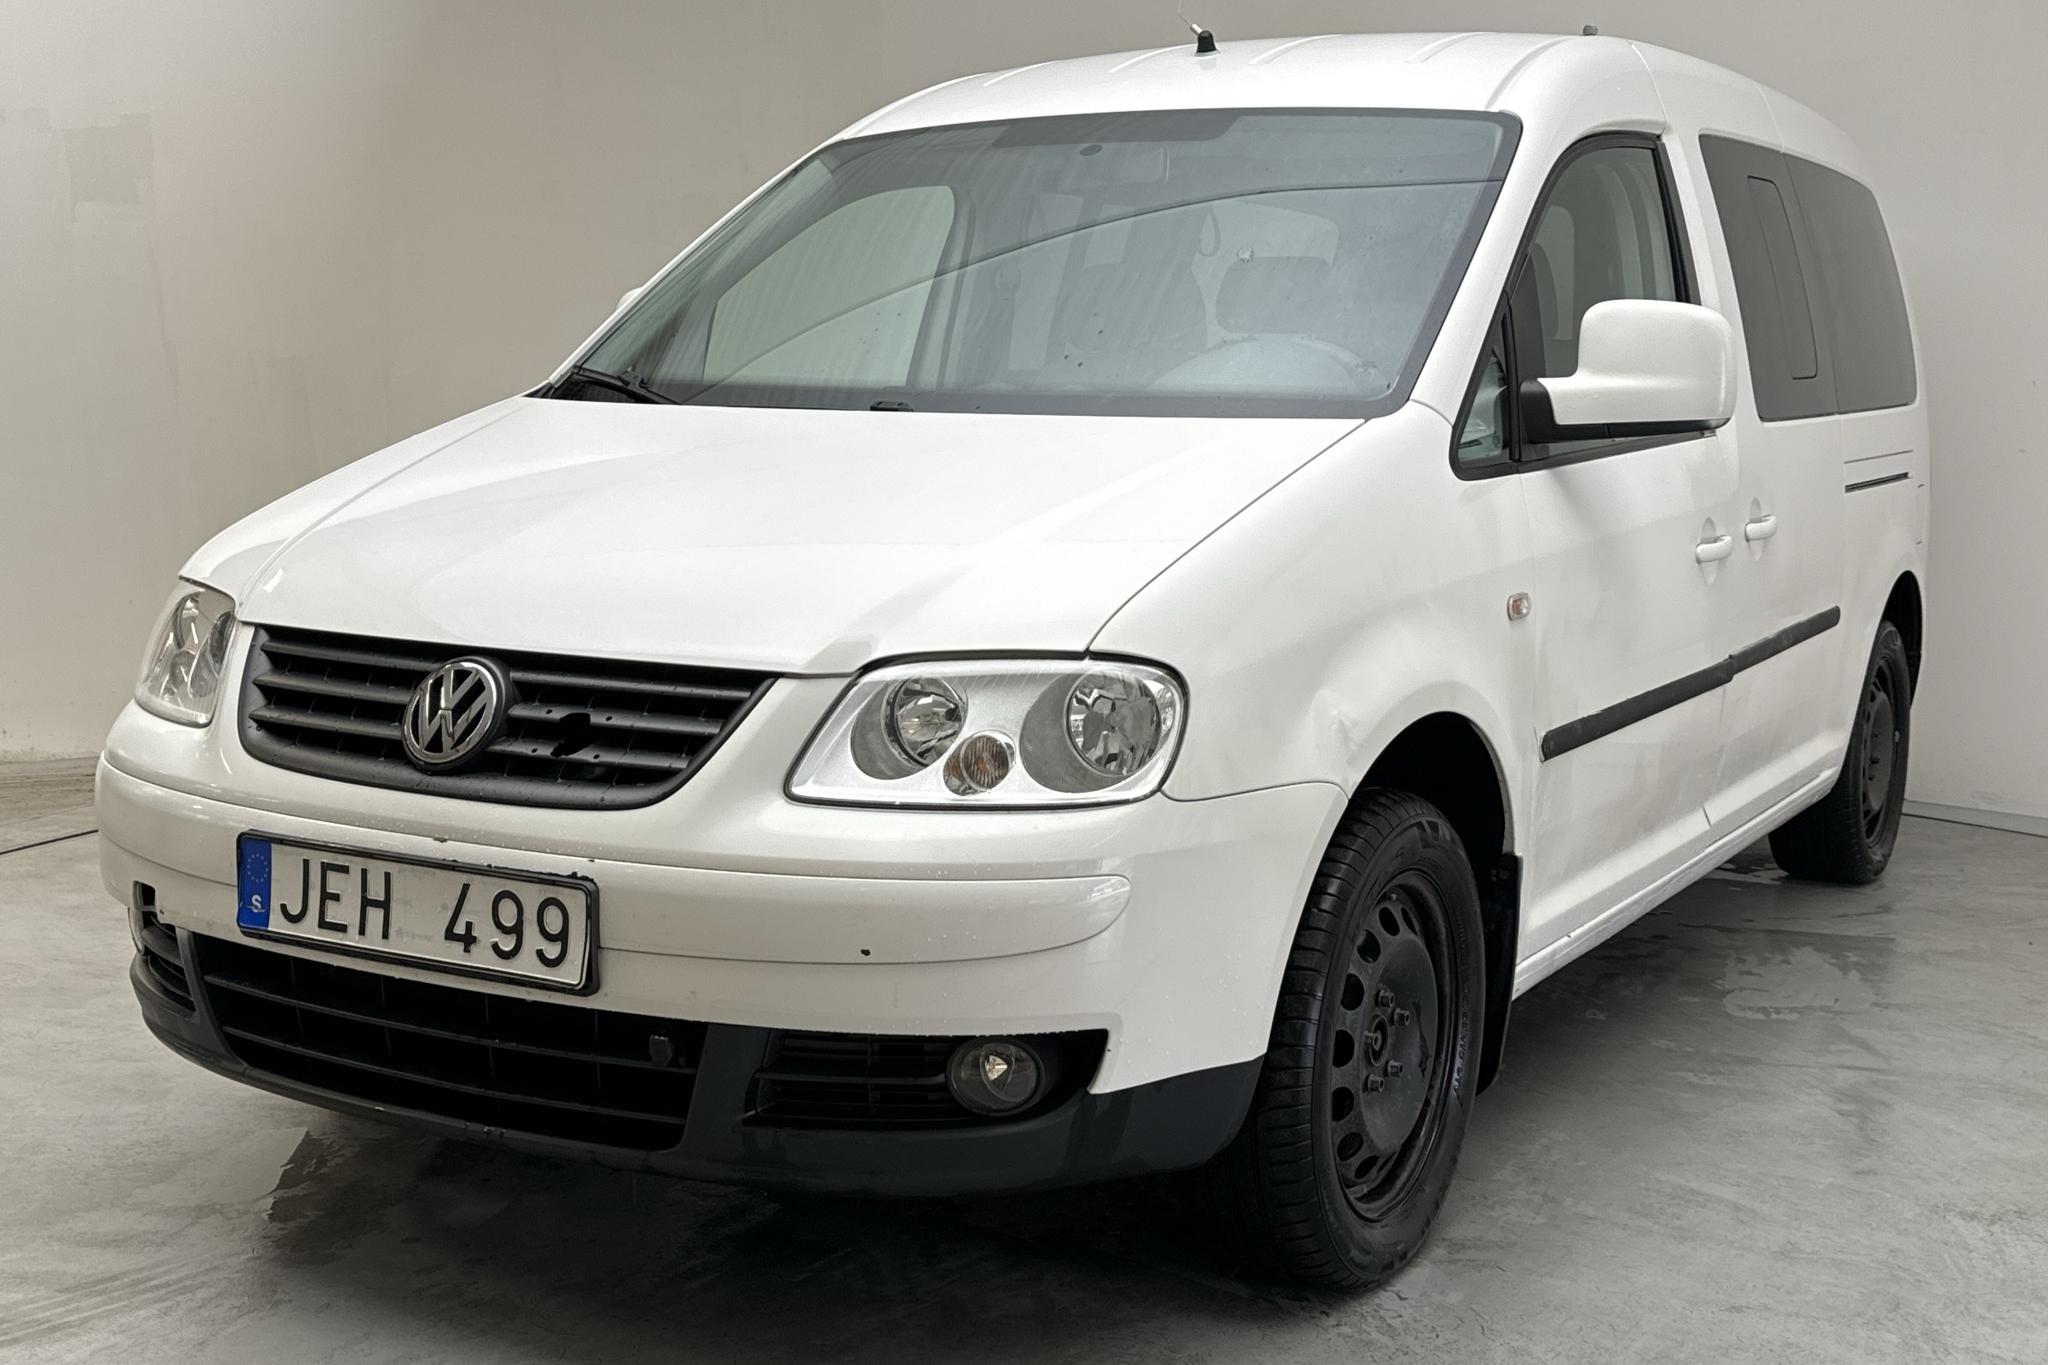 VW Caddy Maxi Life 1.9 TDI (105hk) - 174 910 km - Automatic - white - 2009